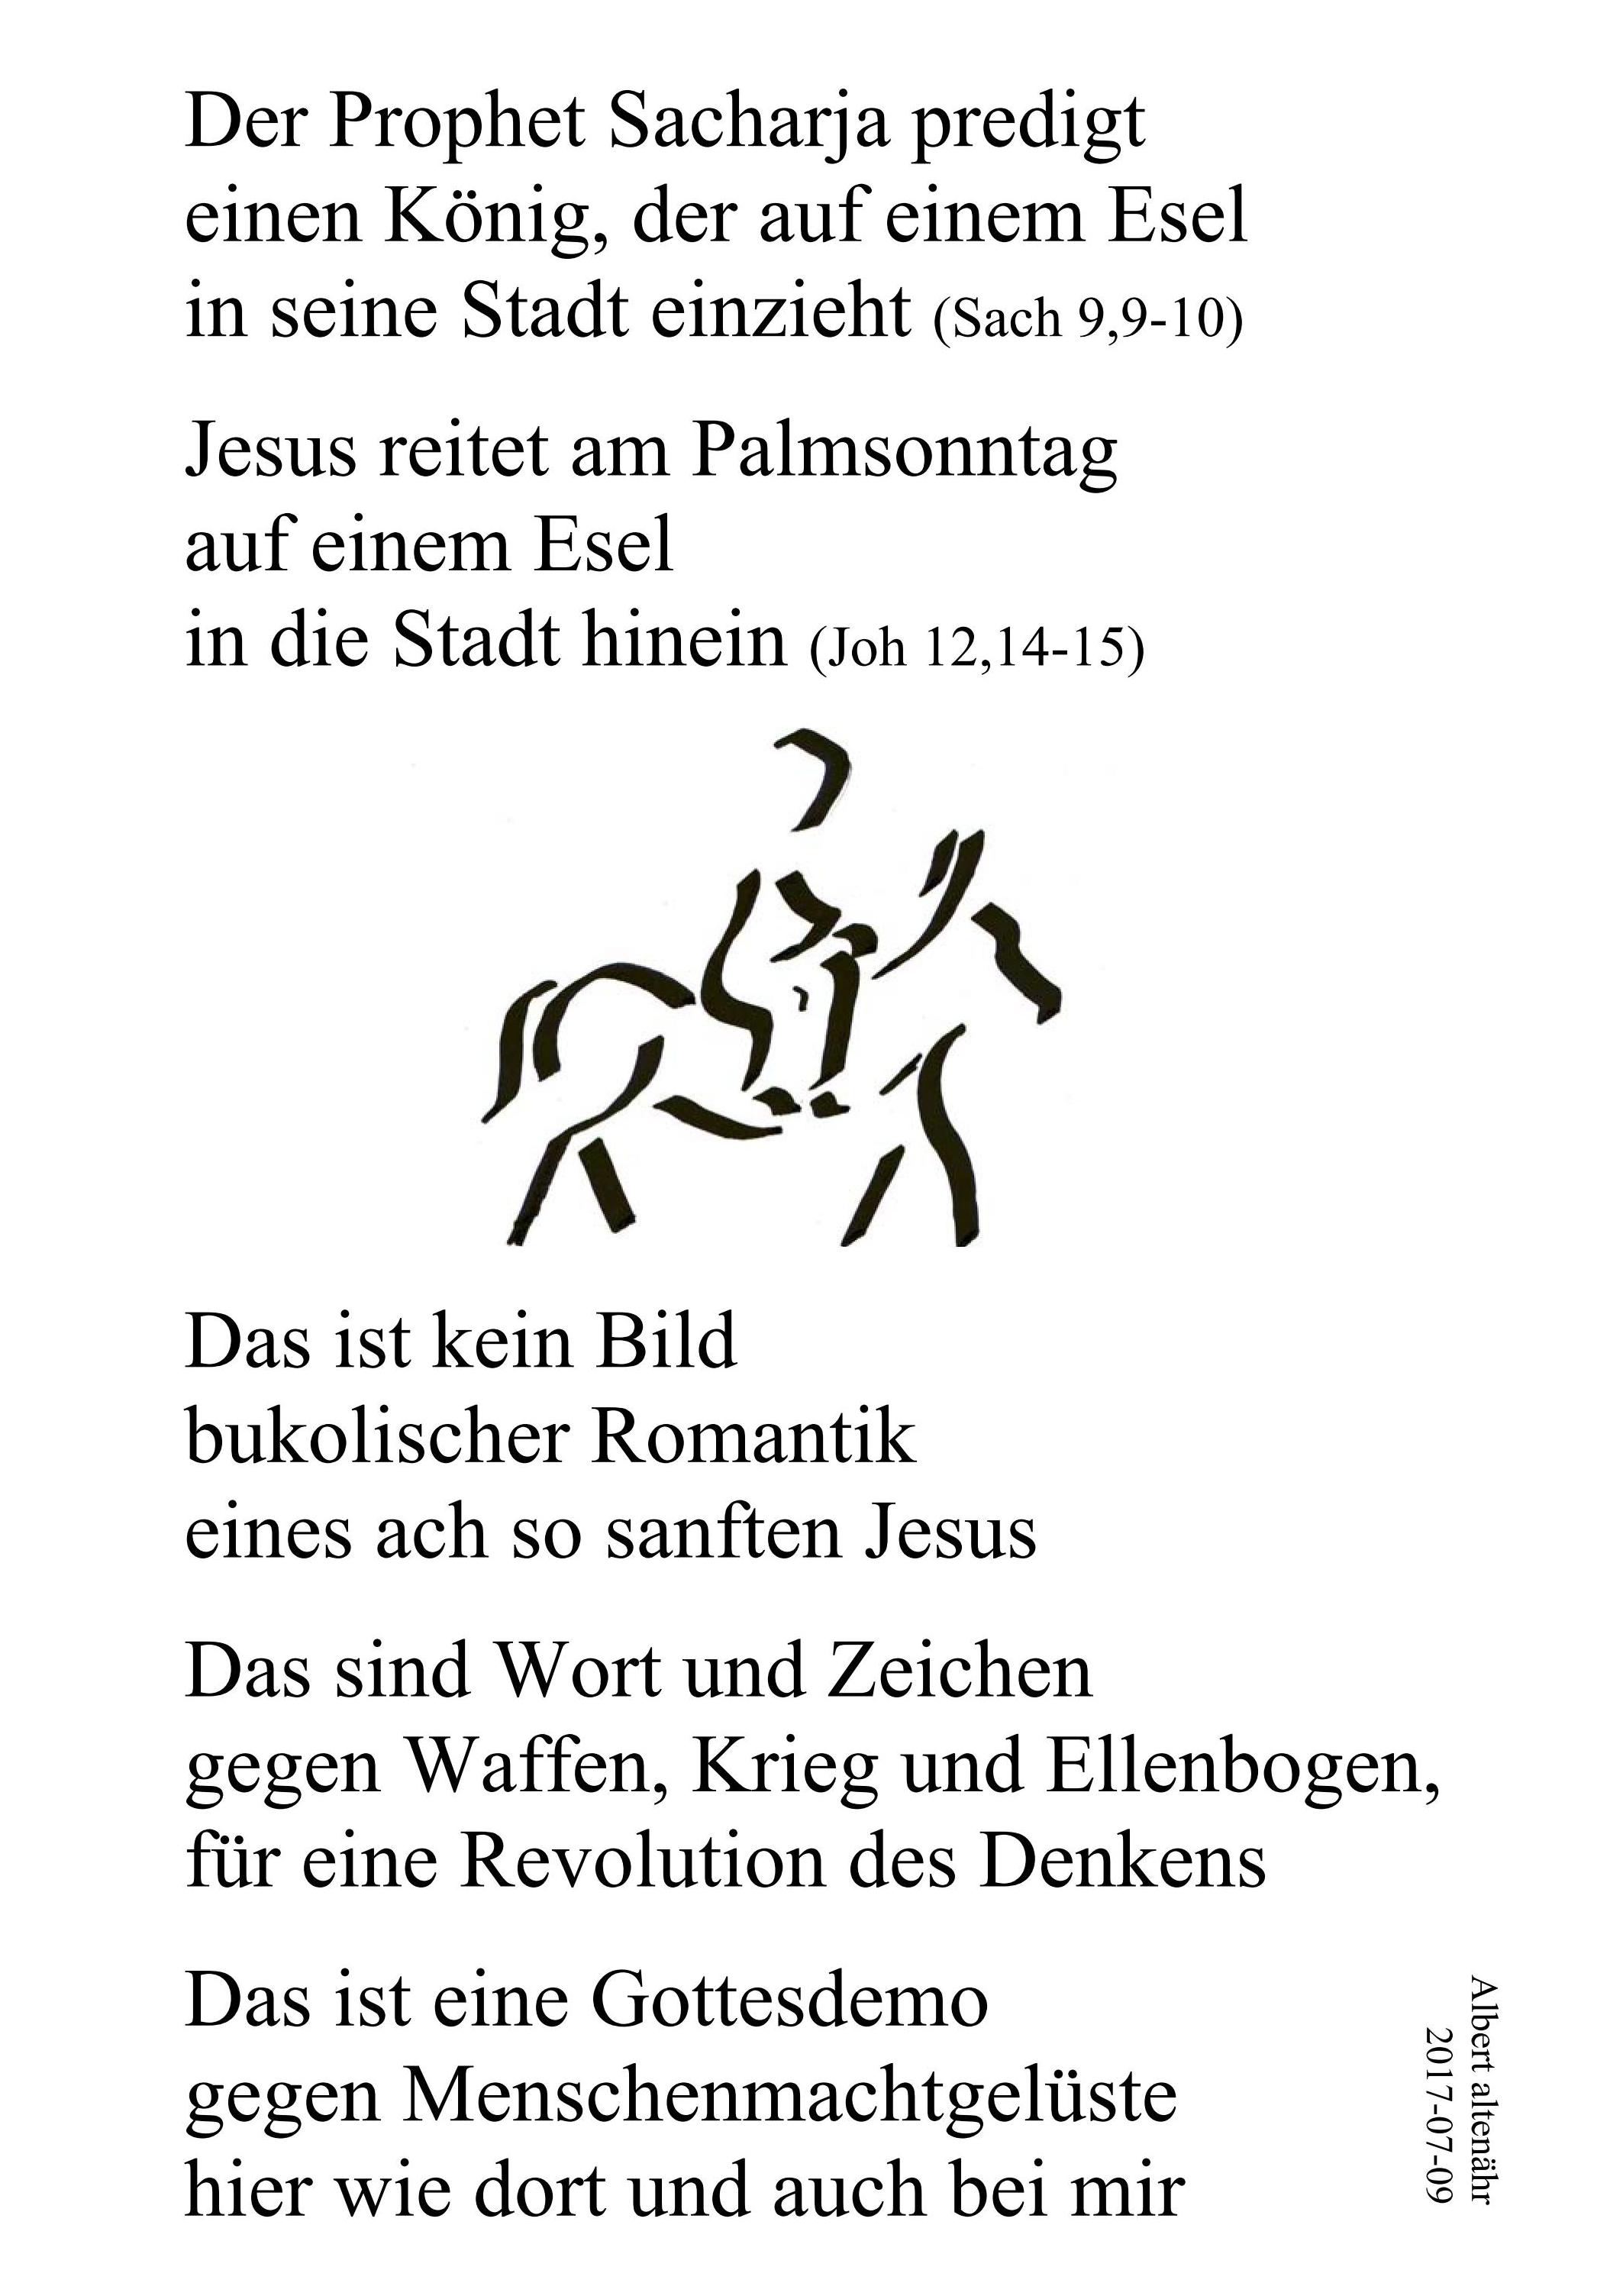 Der Prophet Sacharja predigt Jesus auf dem Esel